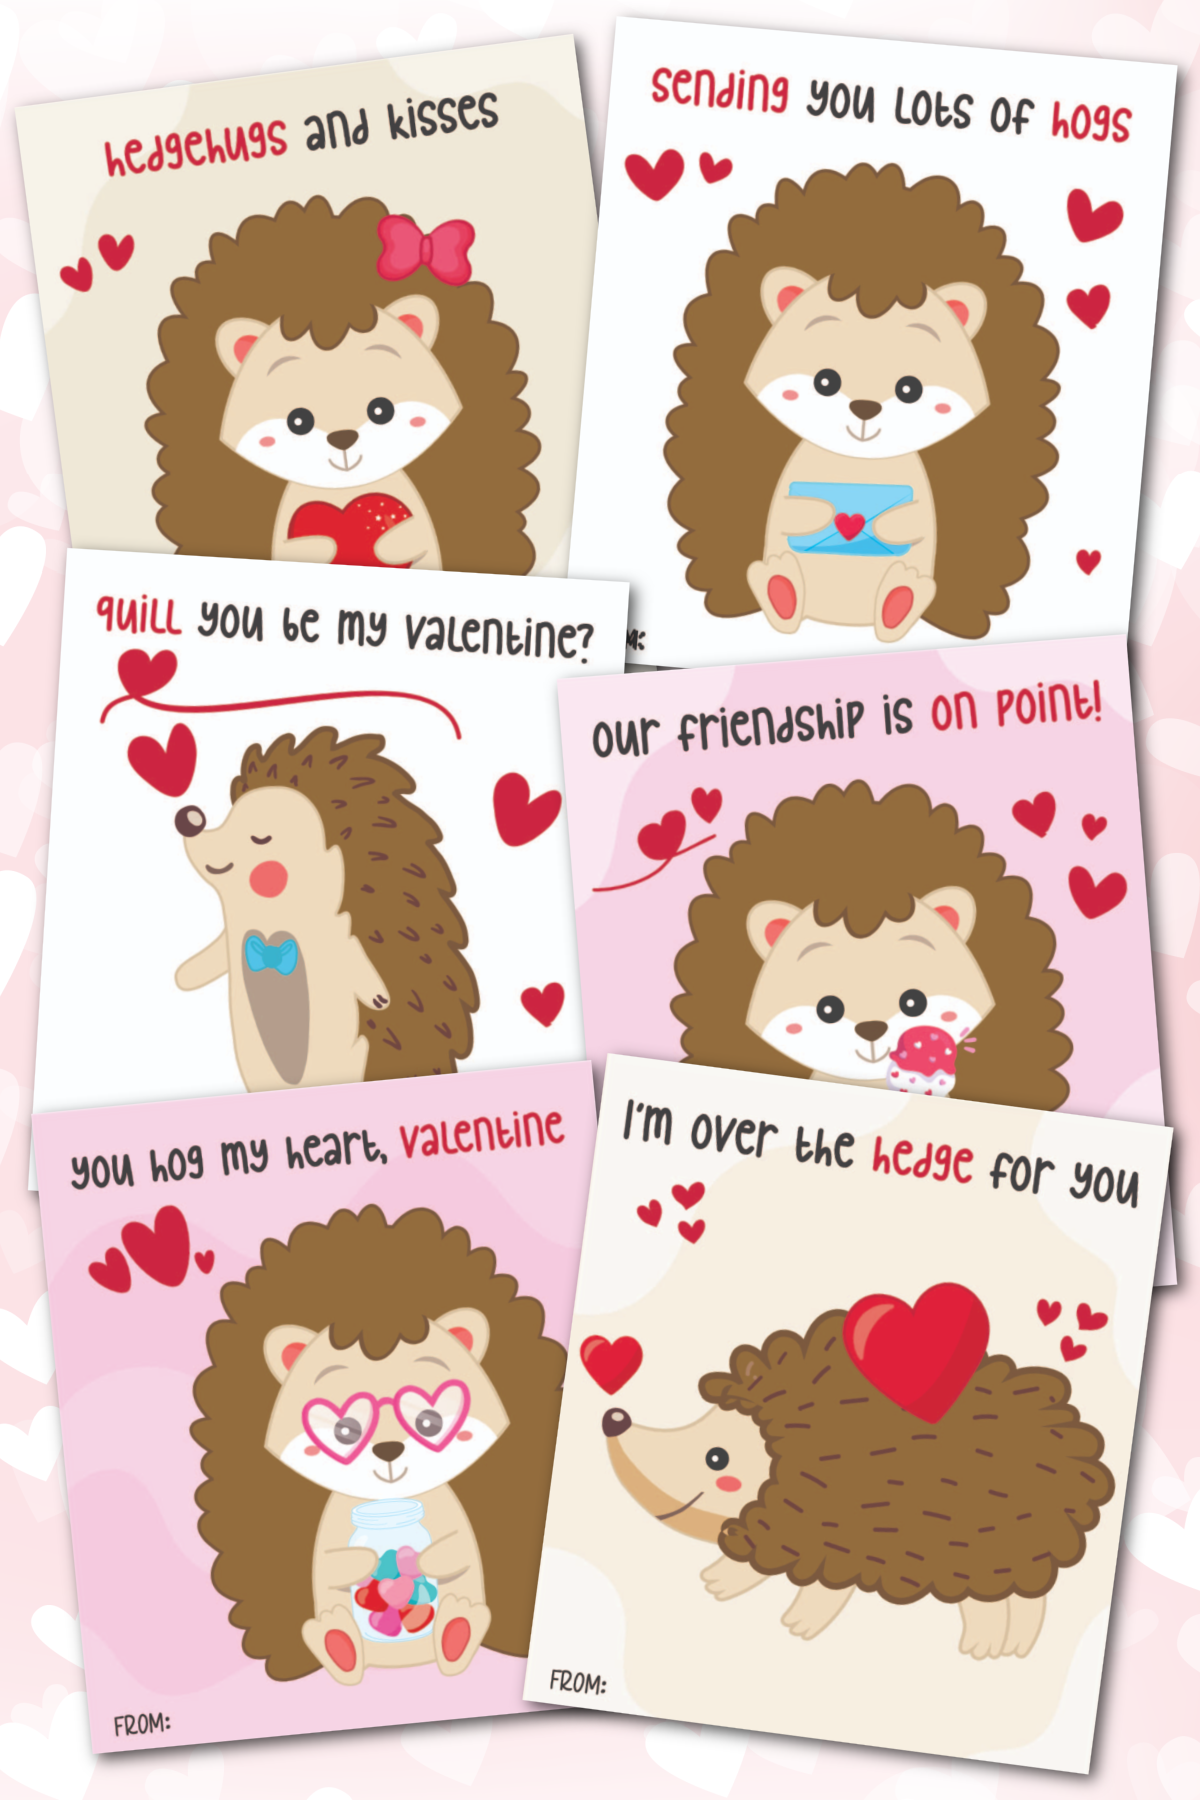 Hedgehog valentine's day cards.